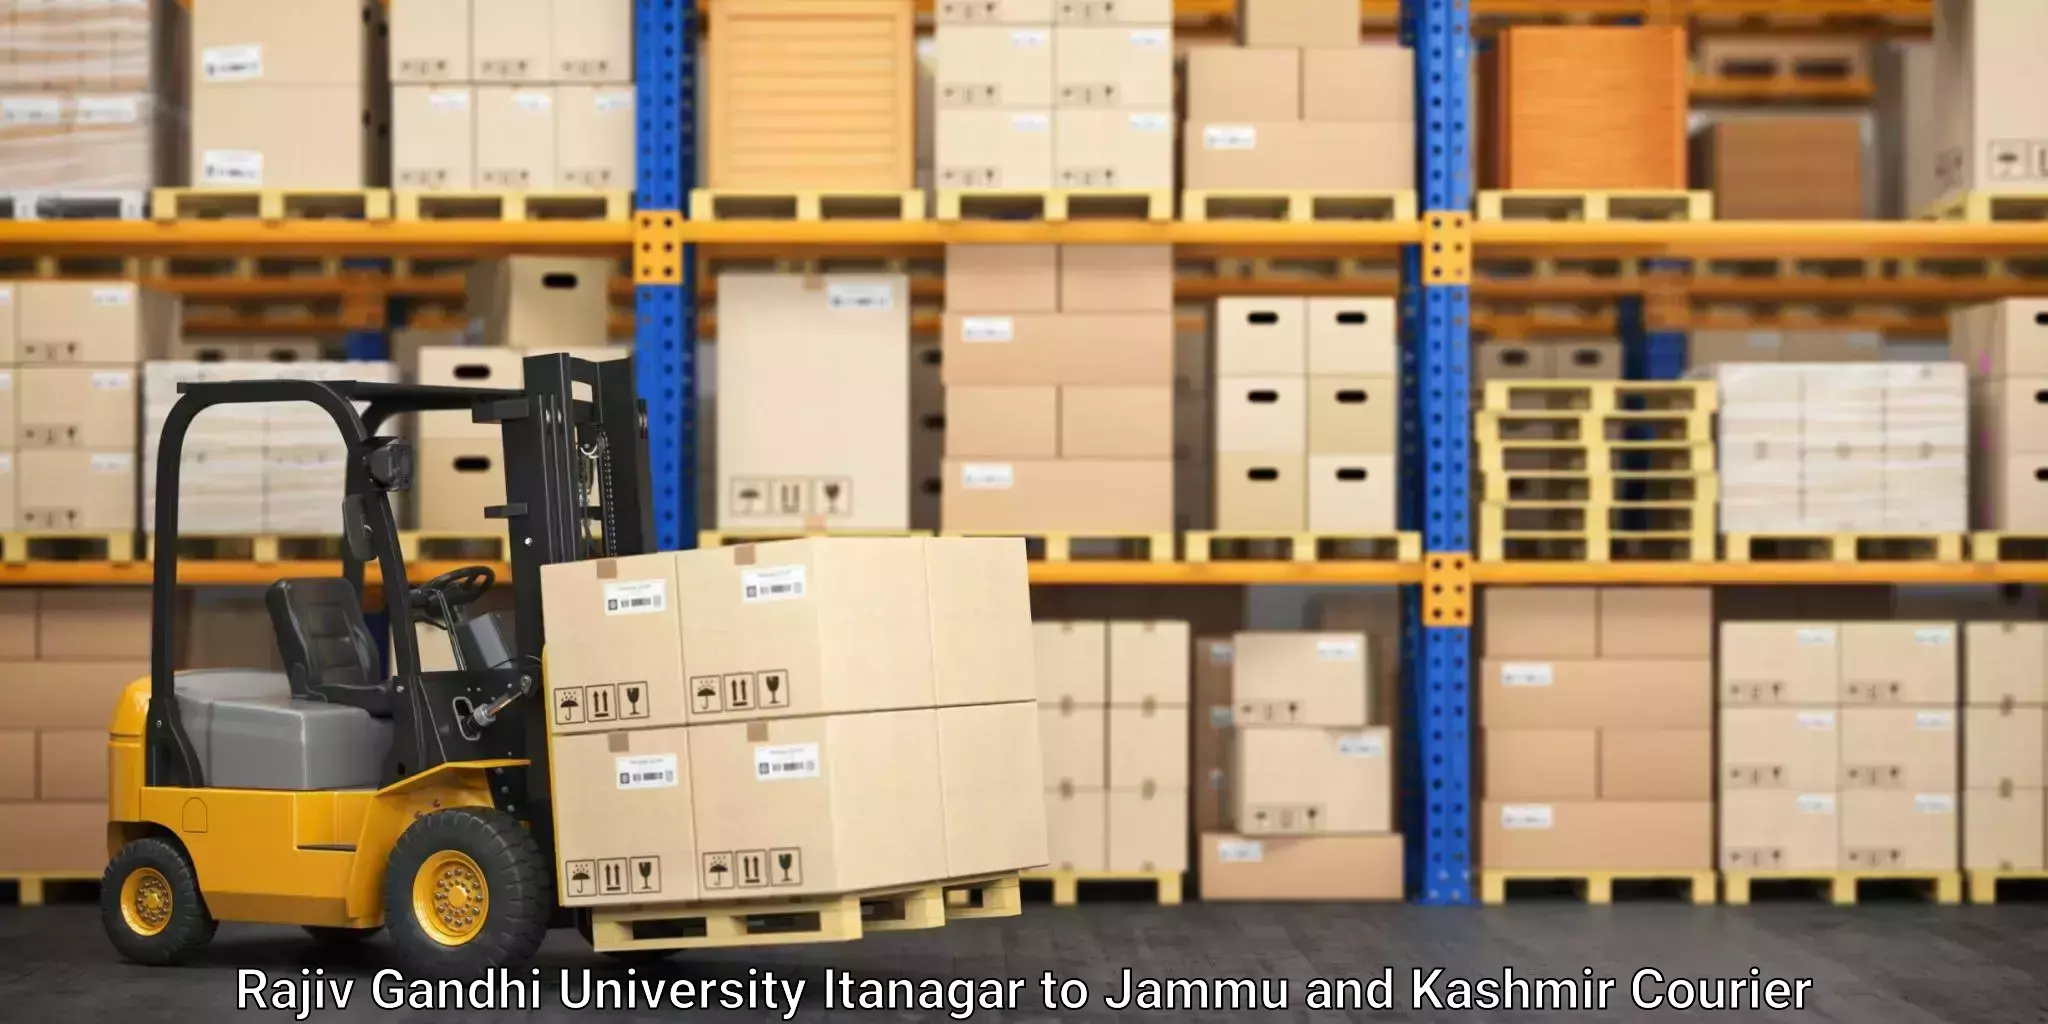 Courier service efficiency Rajiv Gandhi University Itanagar to Leh